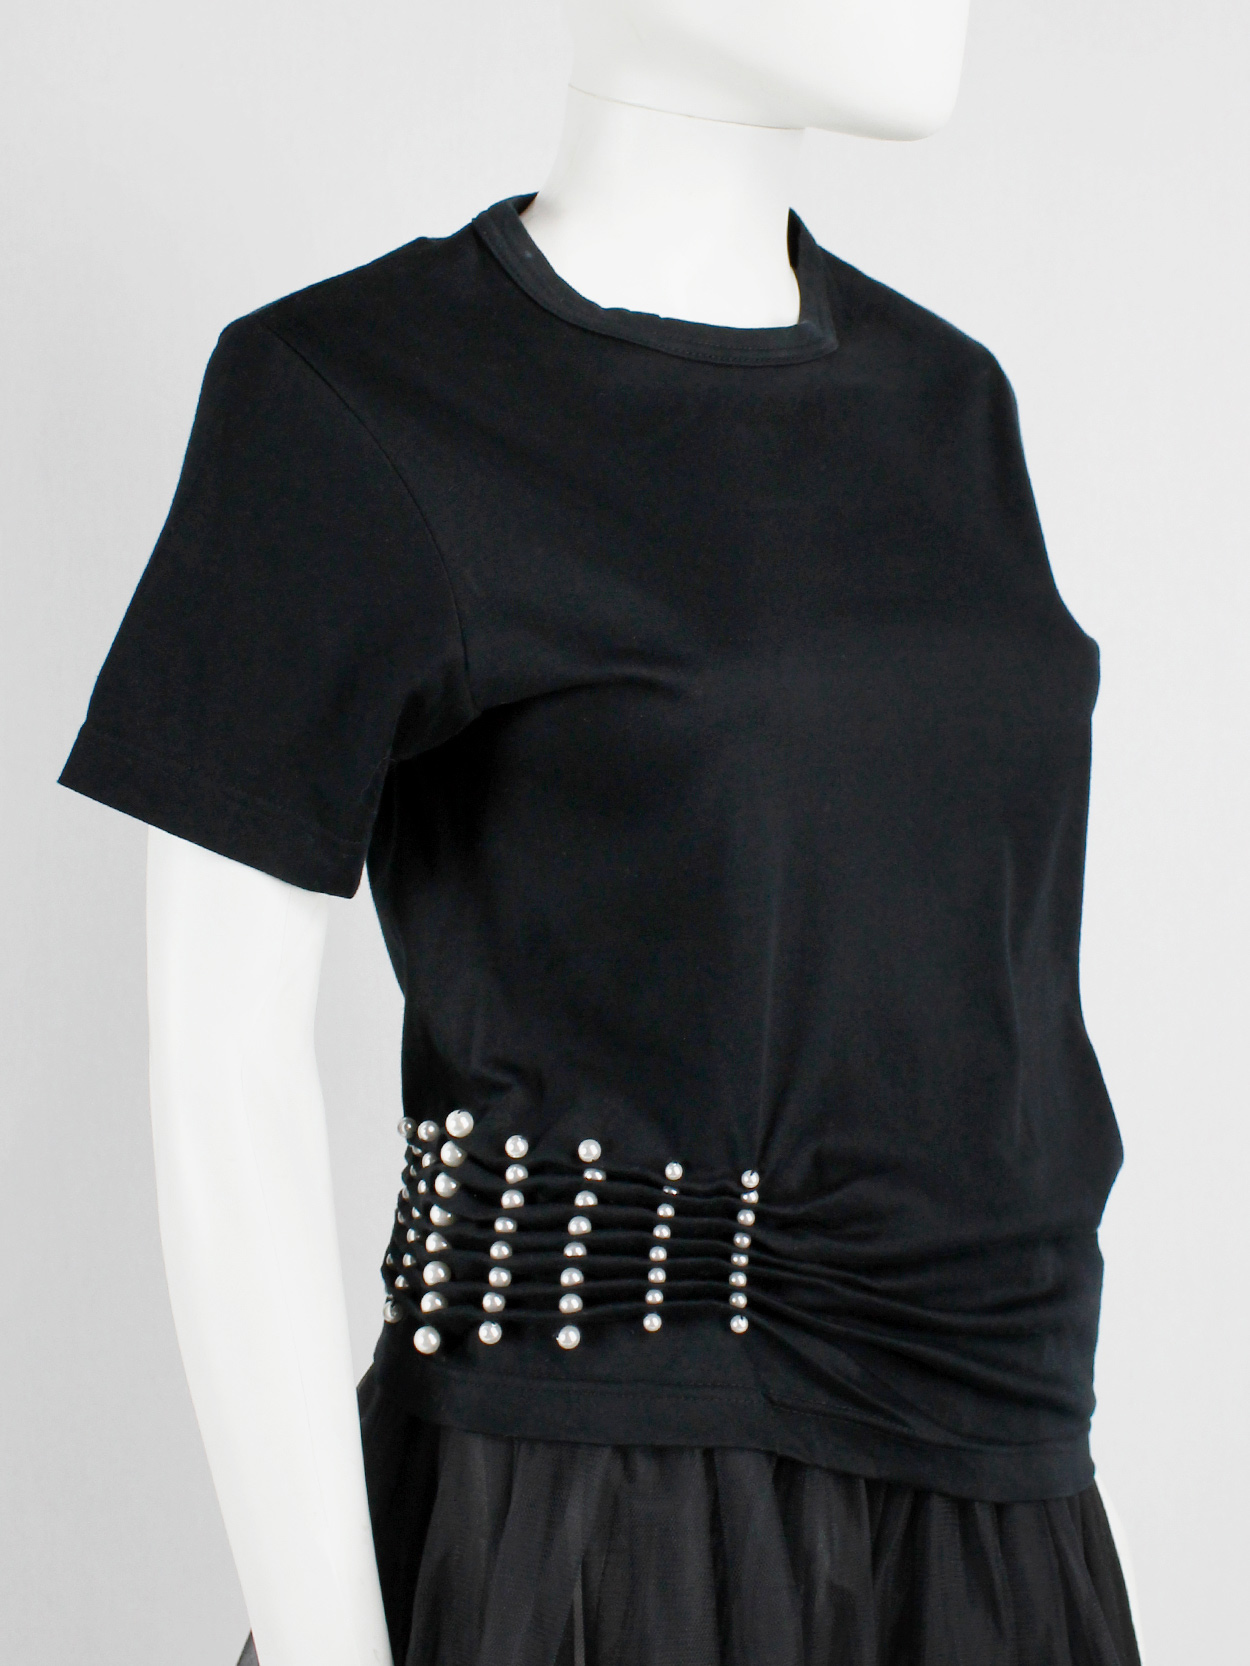 Noir Kei Ninomiya black t-shirt gathered at the waist by rows of pearls ...